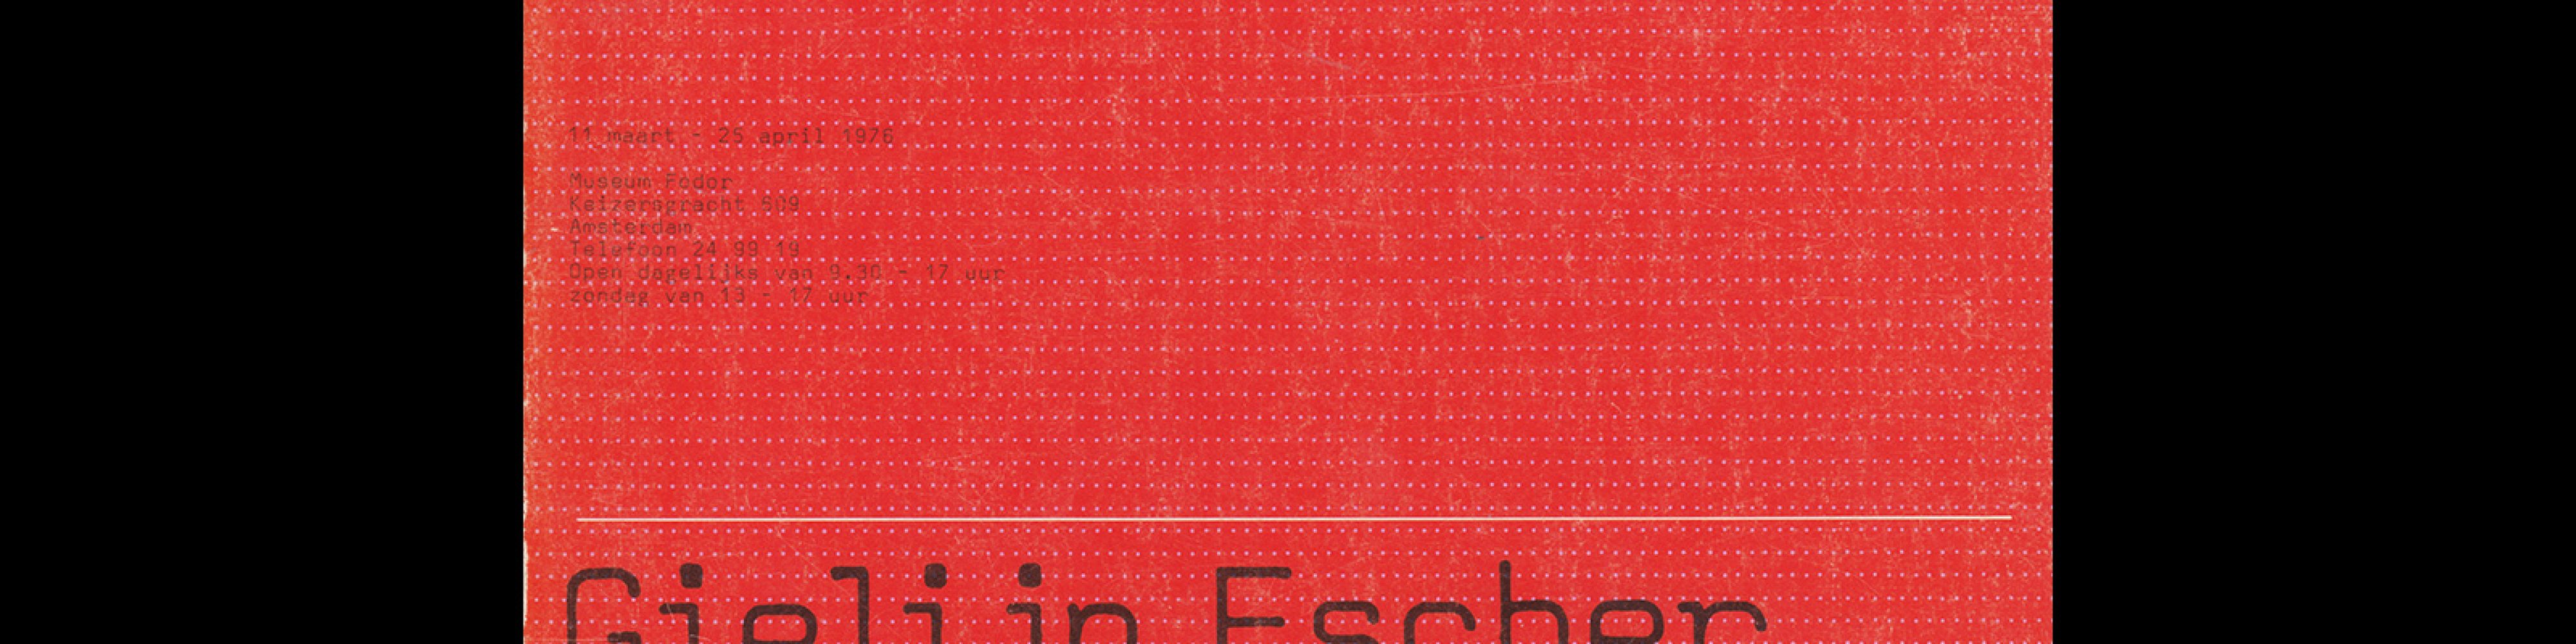 Fodor 33, 1976 - Gielijn Escher, Affiches. Designed by Wim Crouwel and Daphne Duijvelshoff (Total Design)